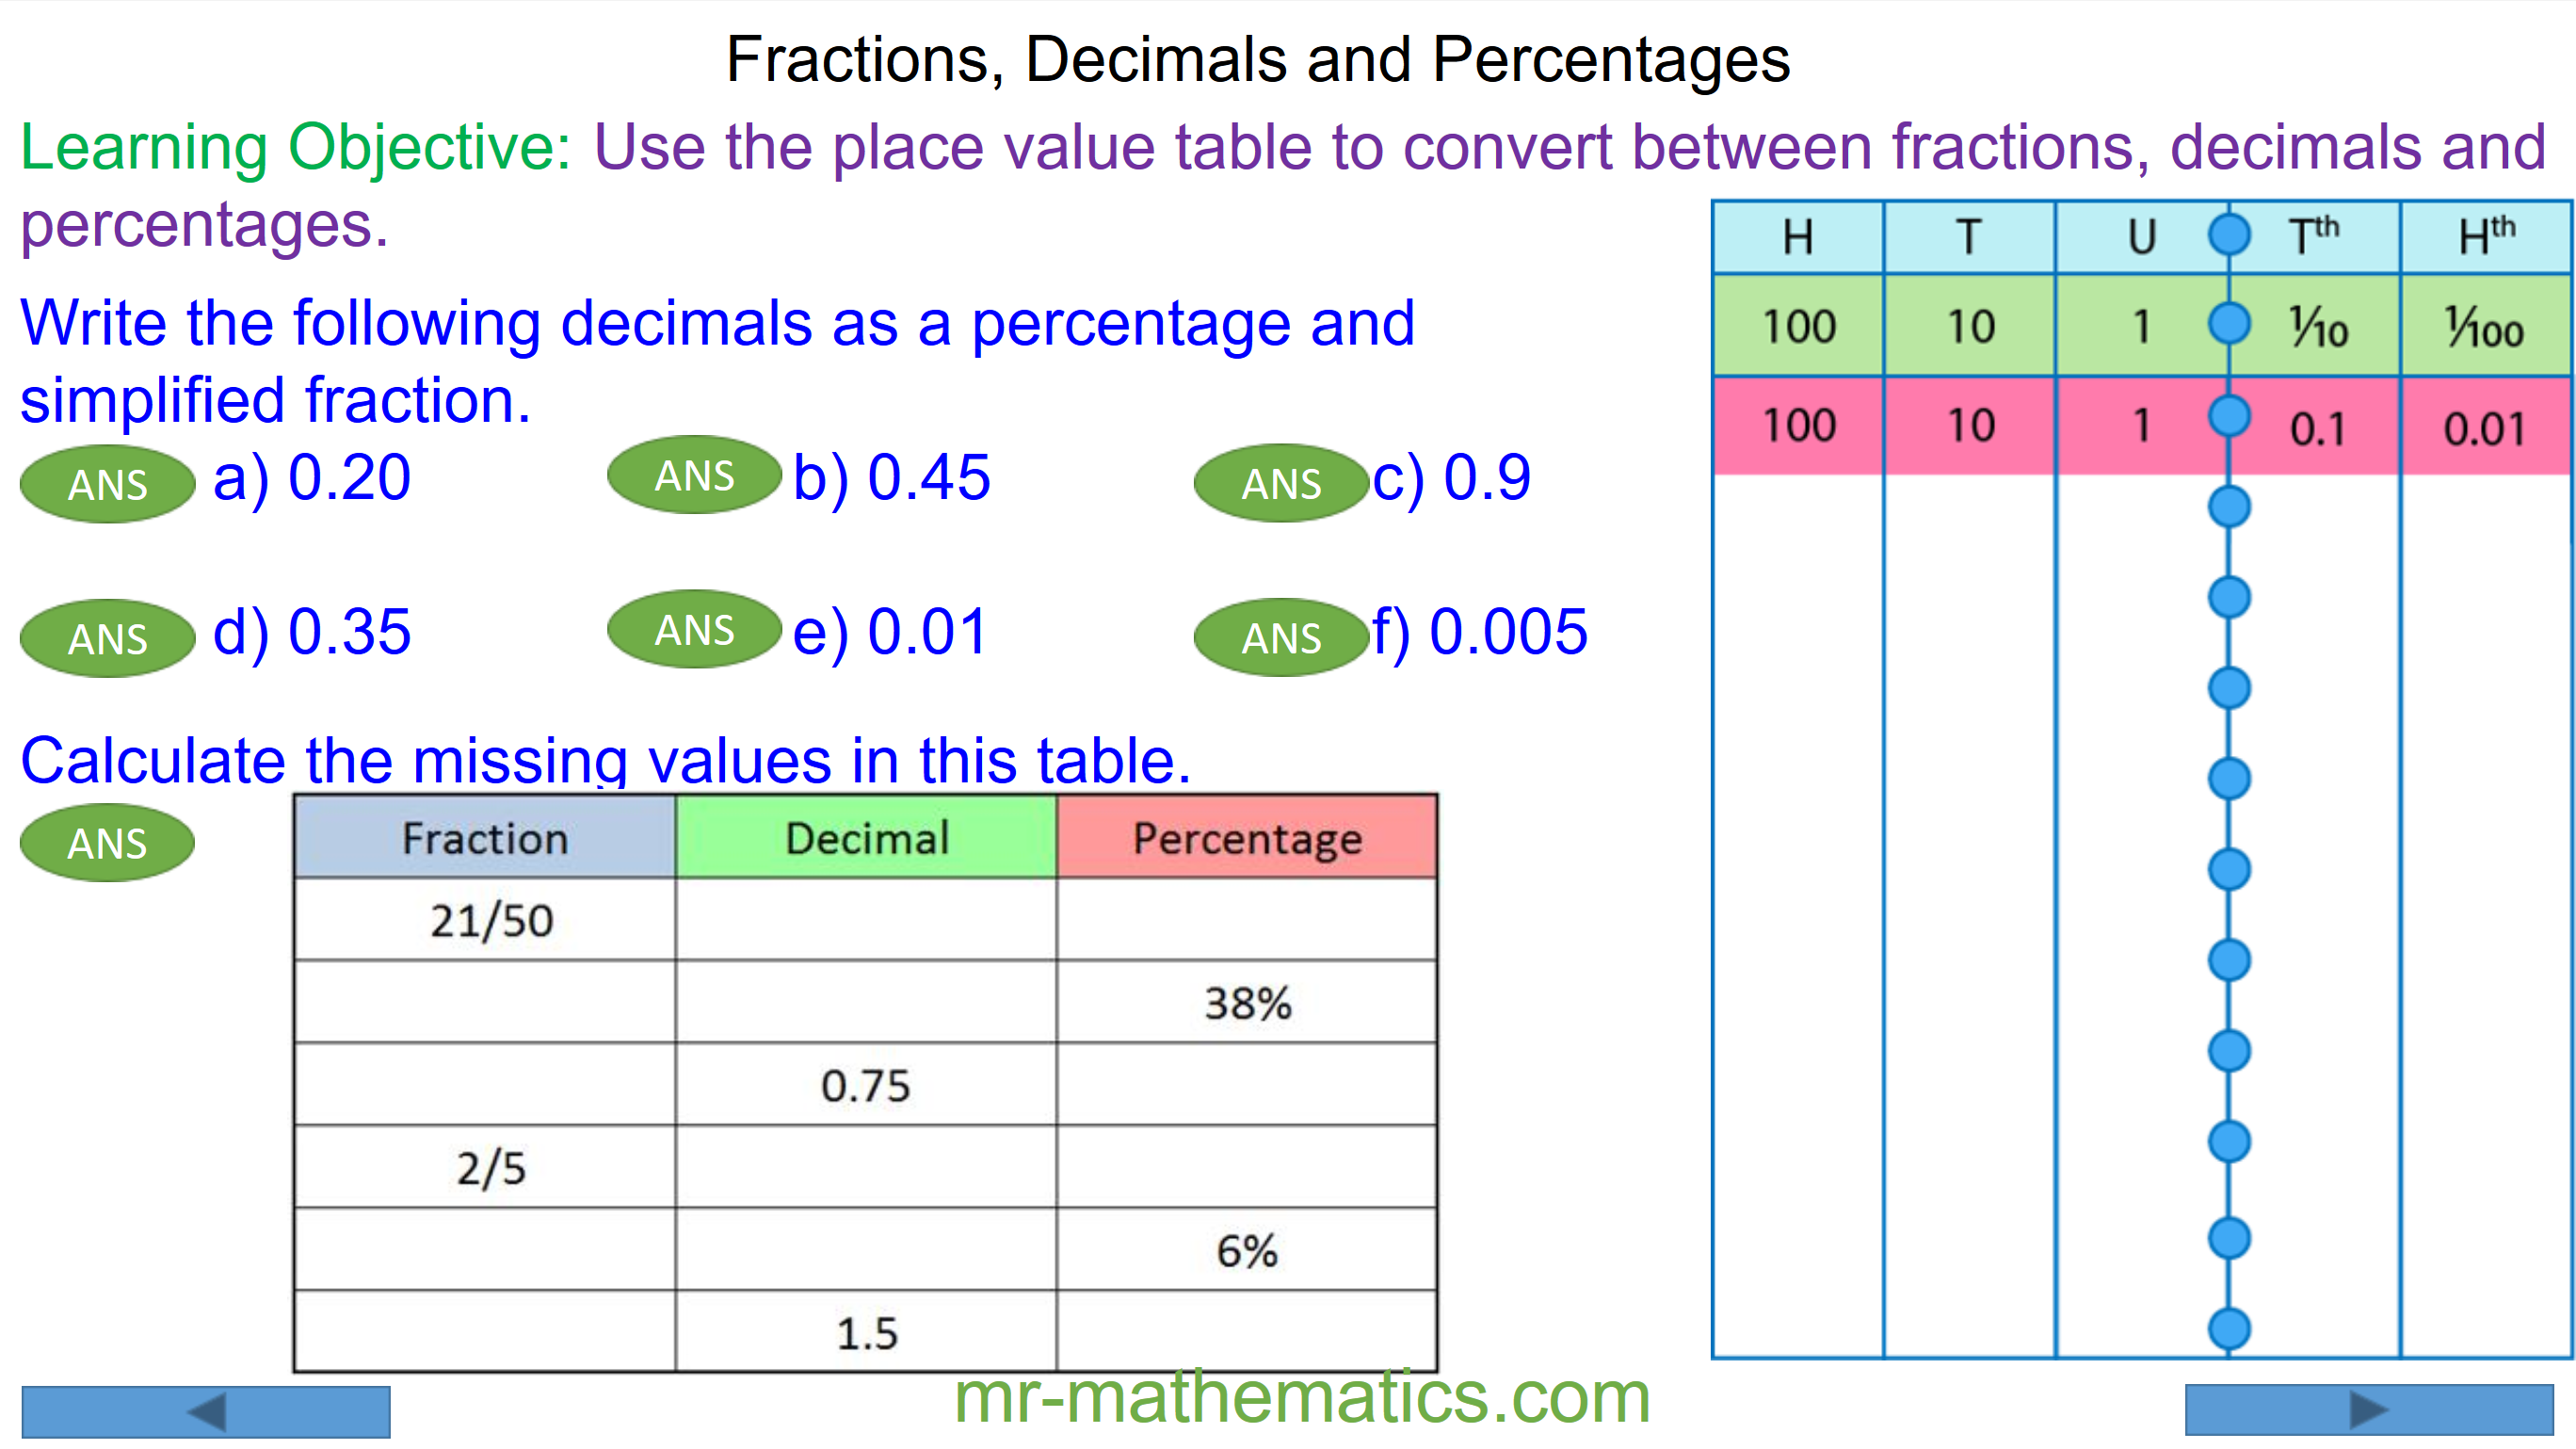 Converting Between Fractions, Decimals and Percentages